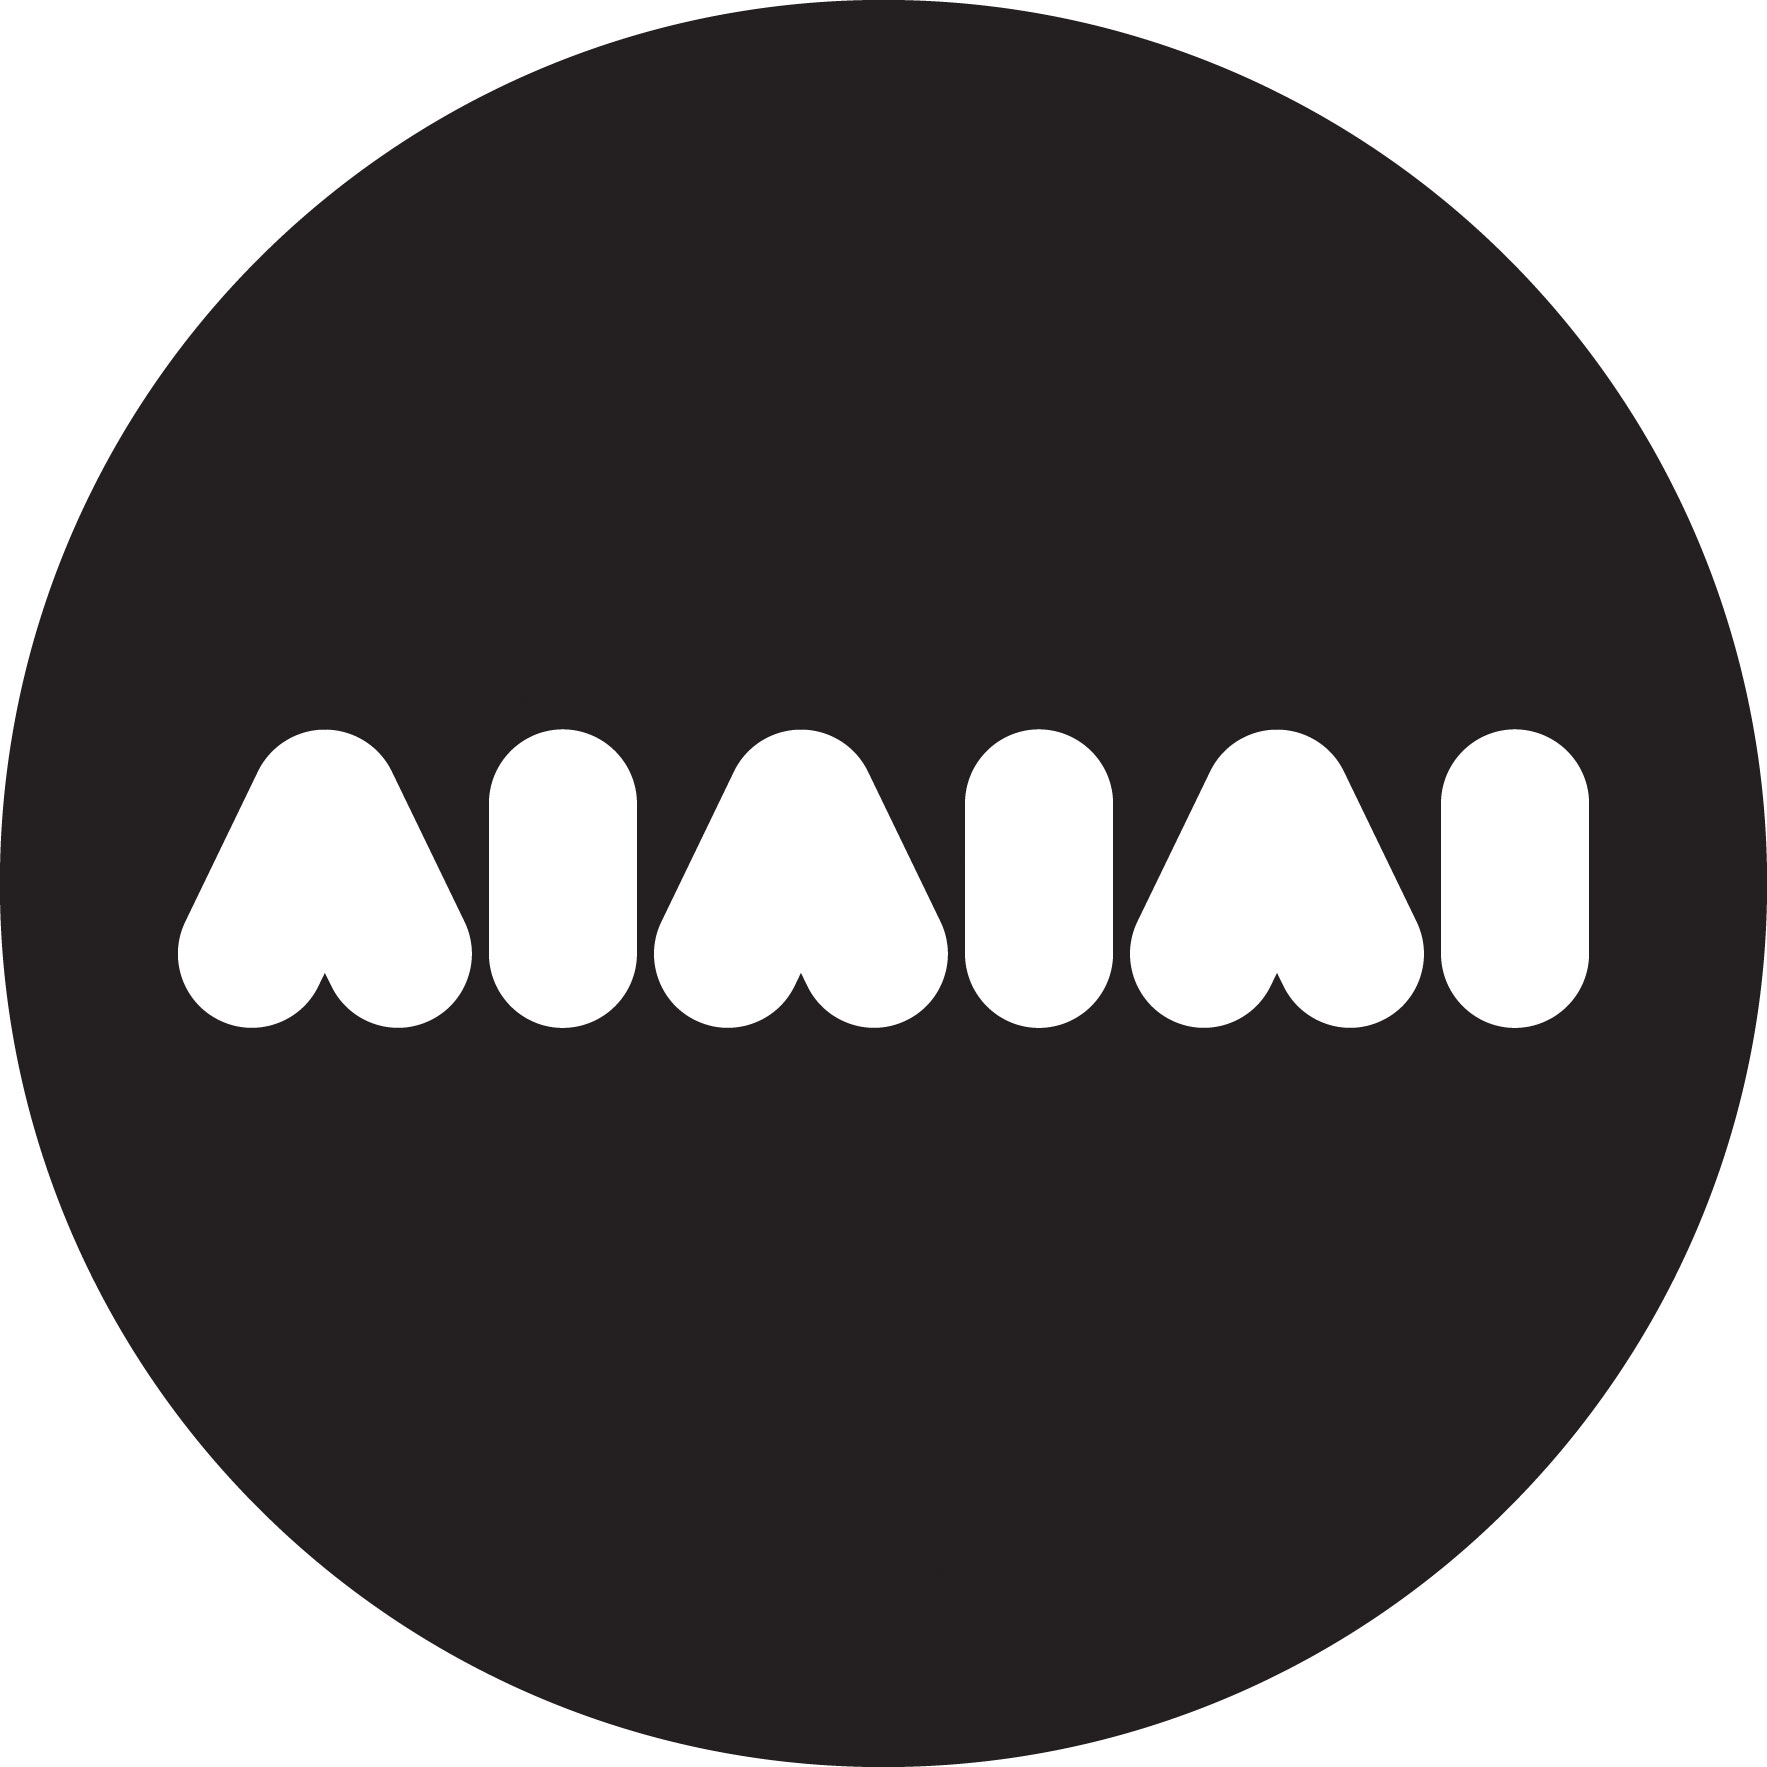 Aiaiai Logo photo - 1